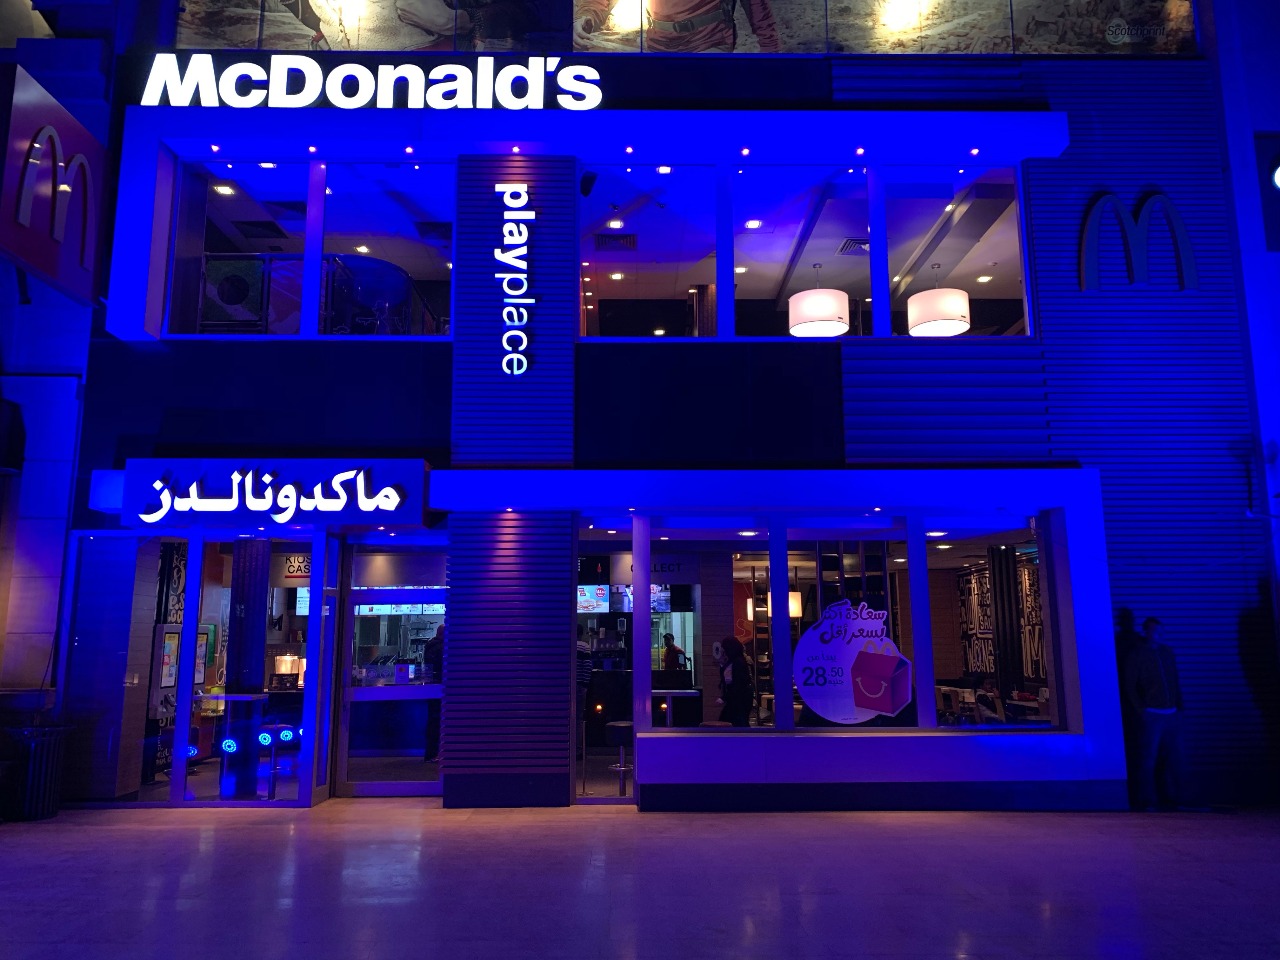  ماكدونالدز مصر (4)